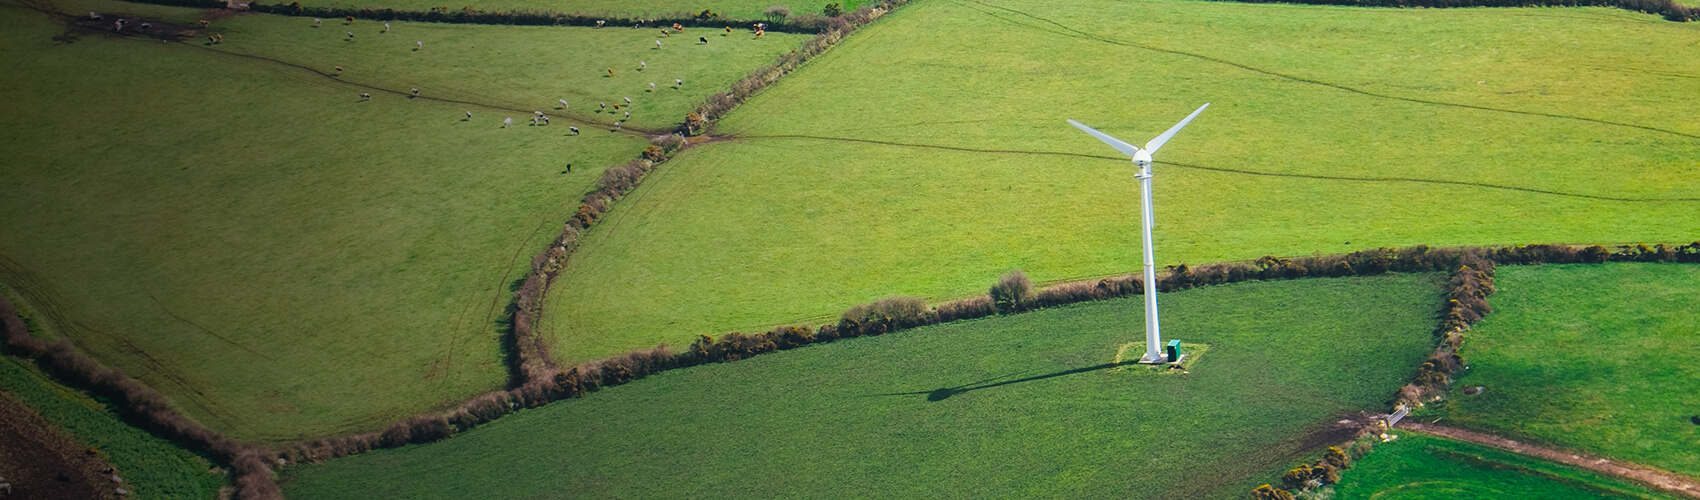 Green fields with wind turbine